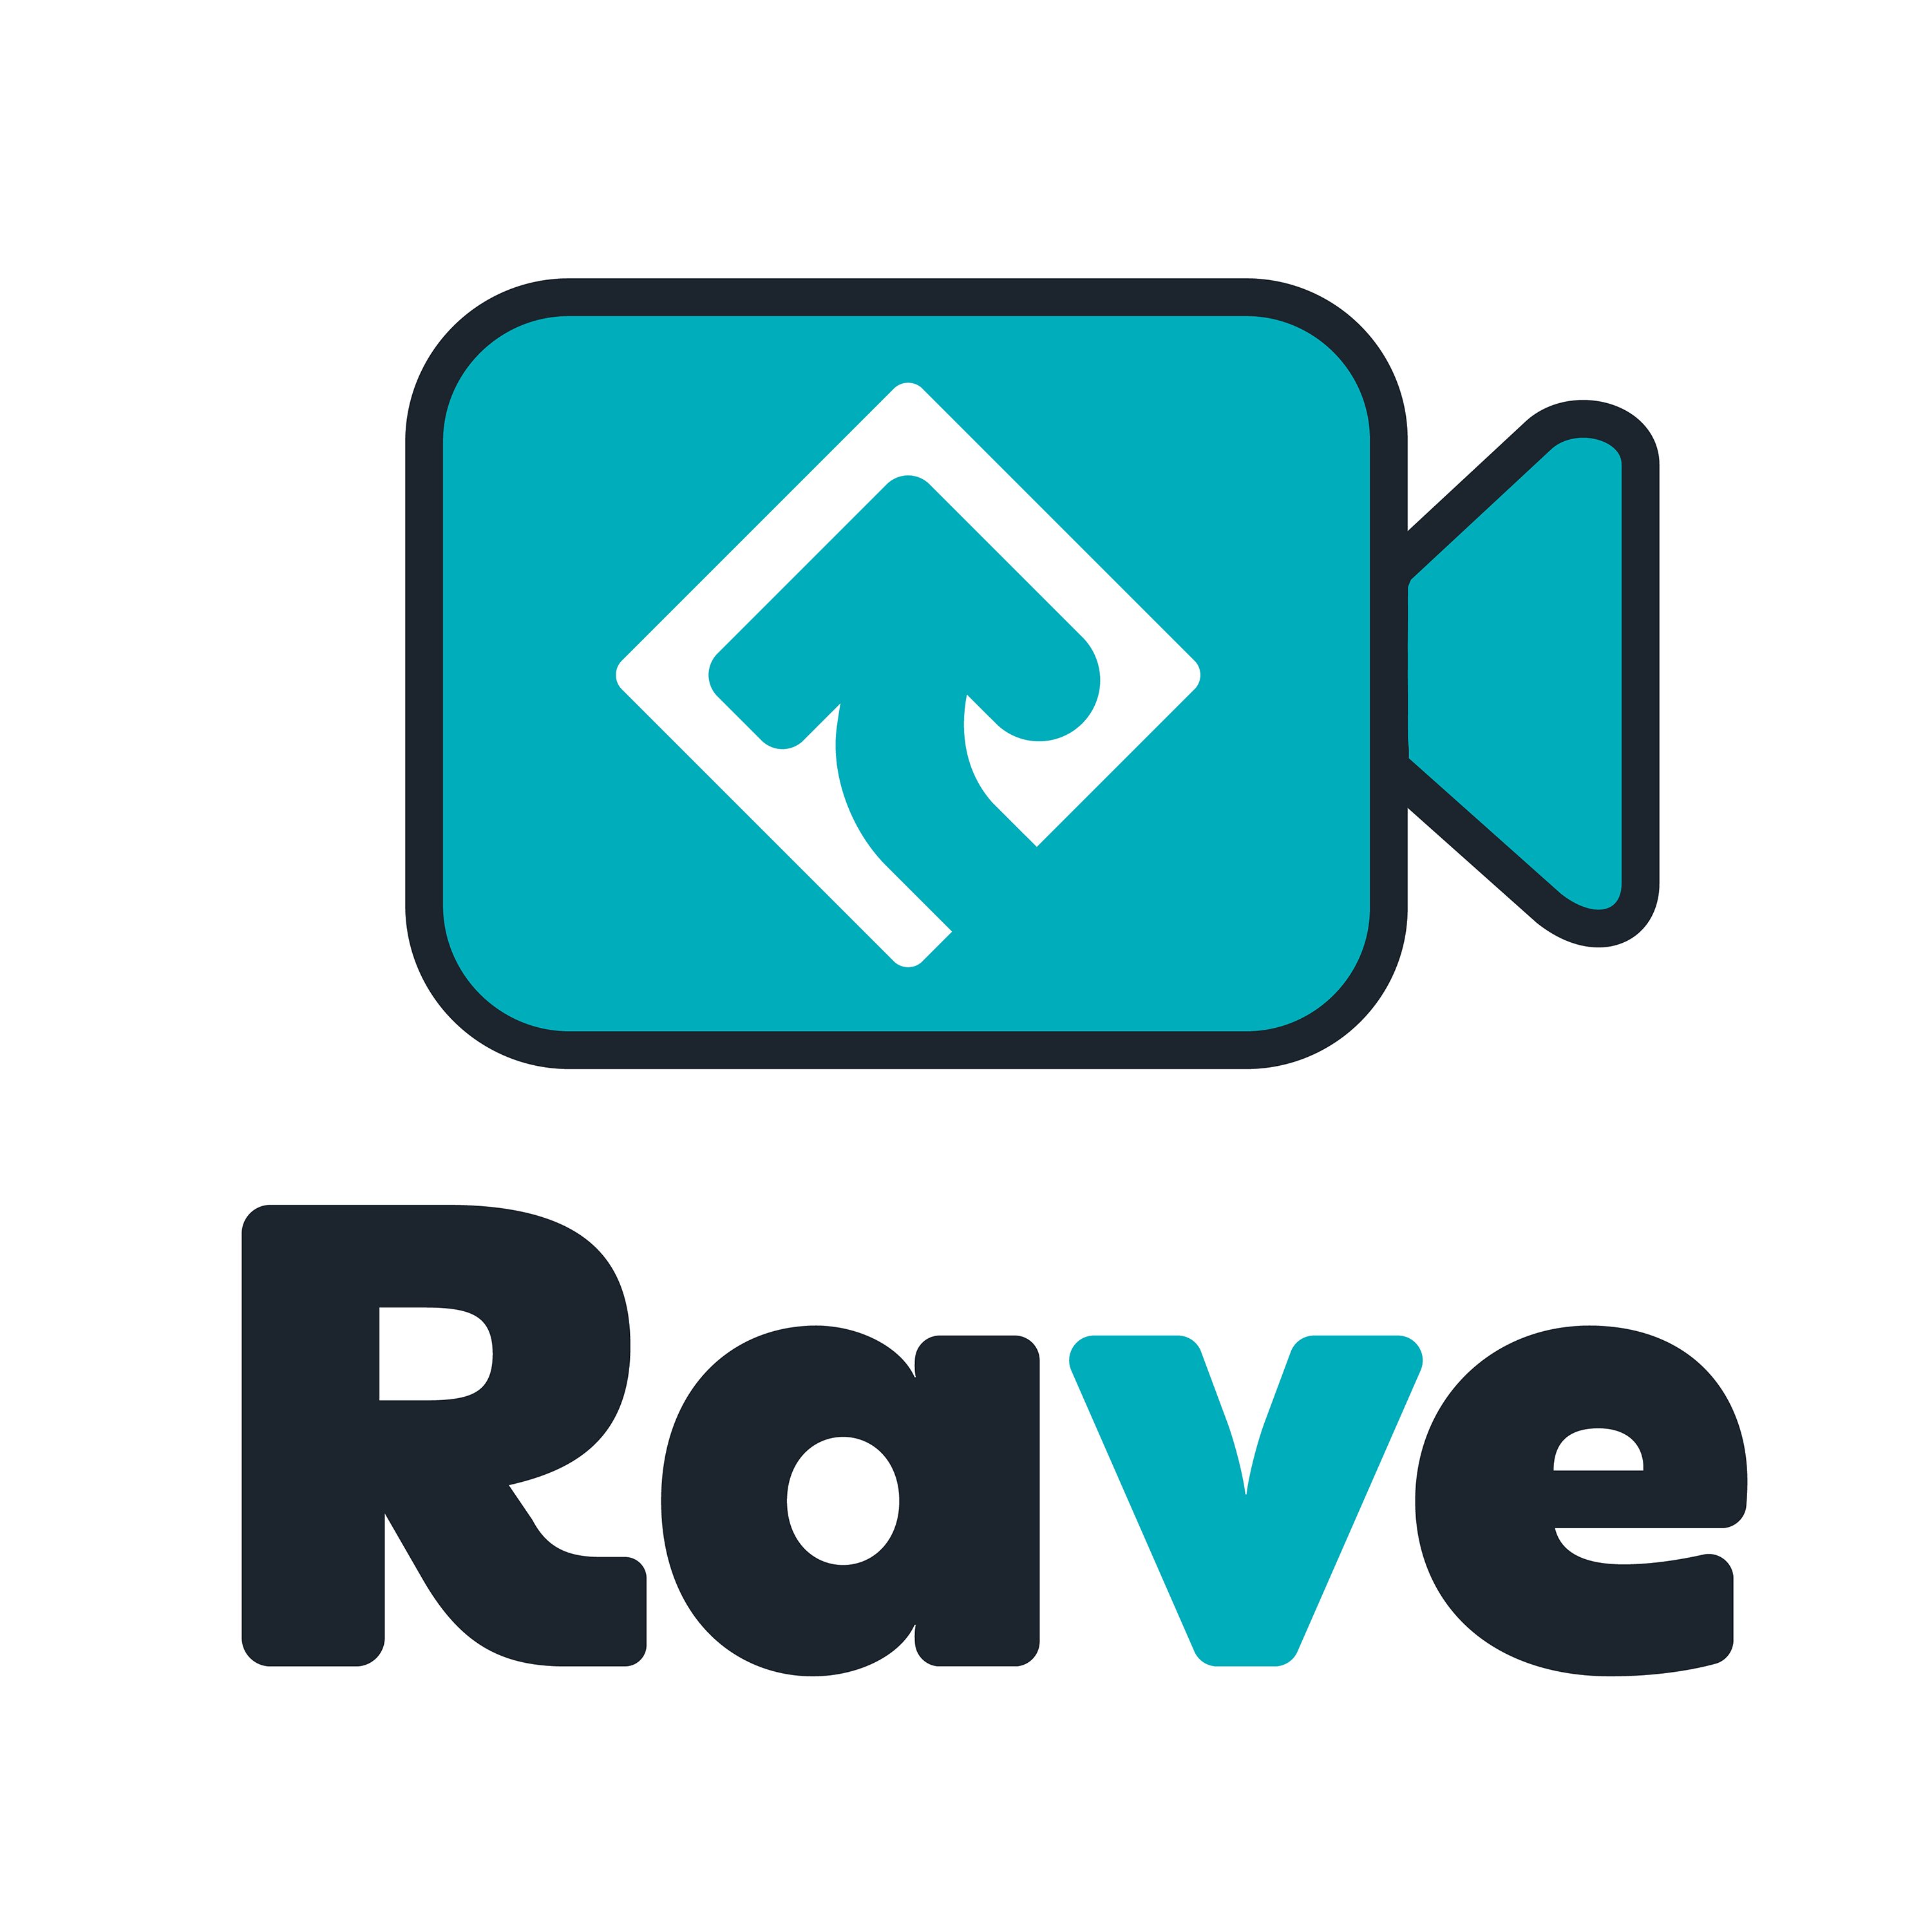 Rave Video Banking App Logo Downsized